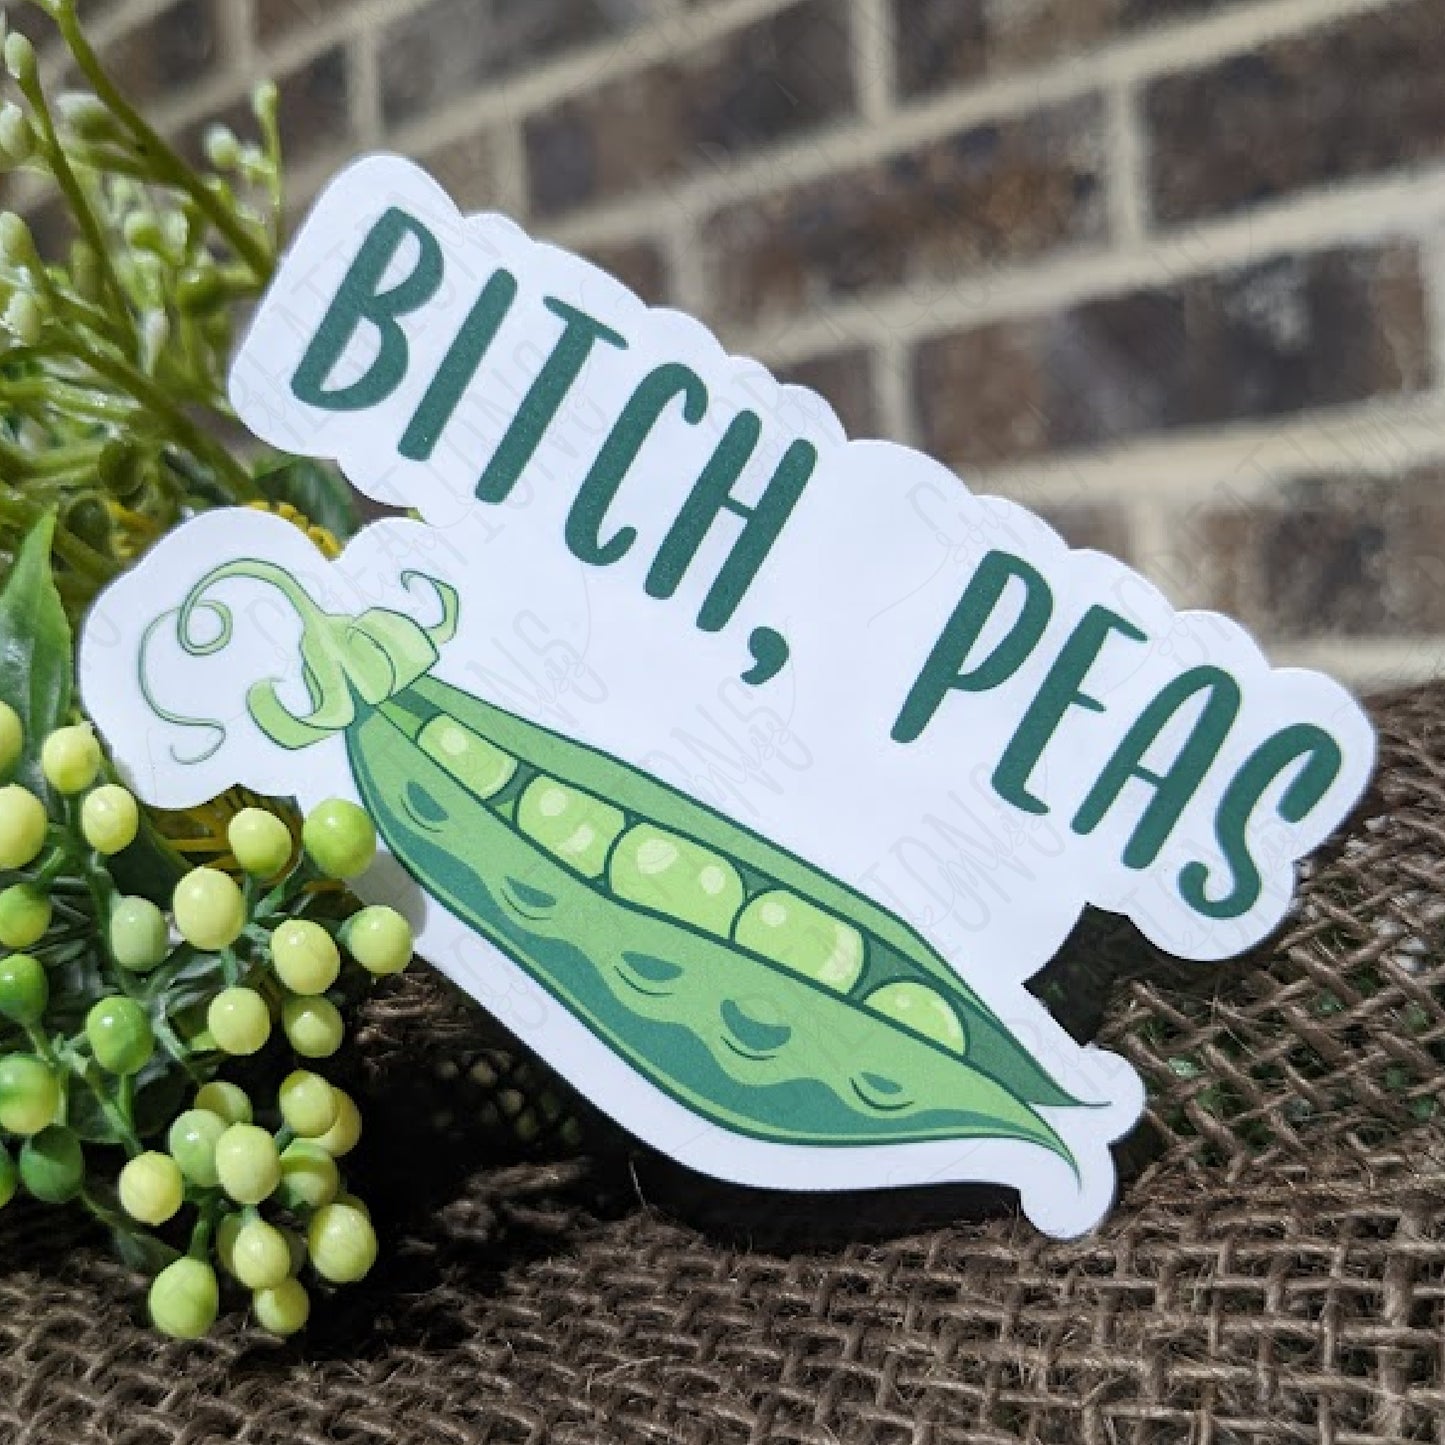 Bitch, Peas